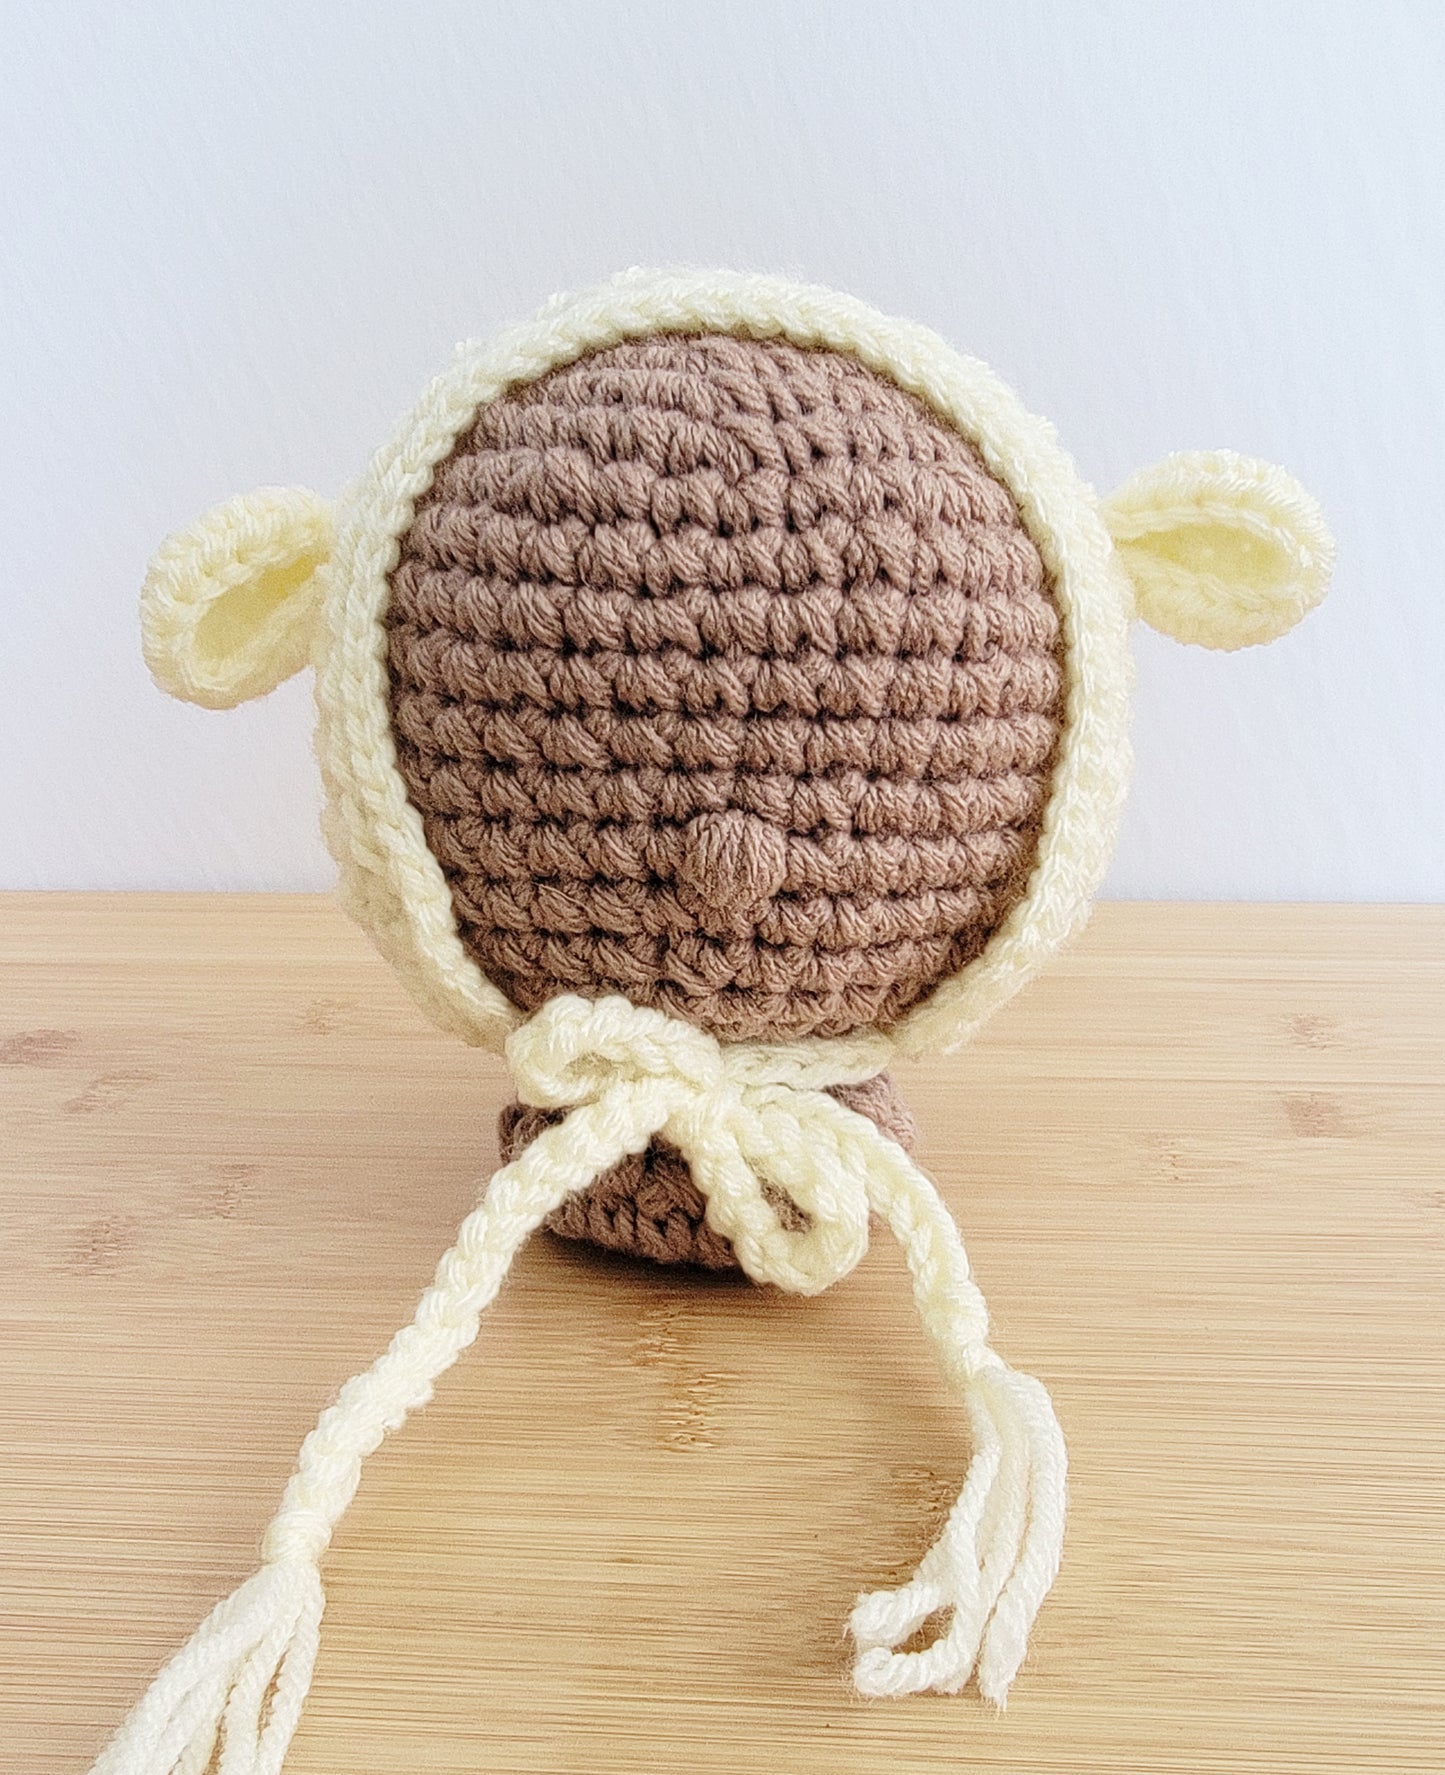 Adjustable Baby & Toddler Lamb Headband - Hand crocheted photo prop